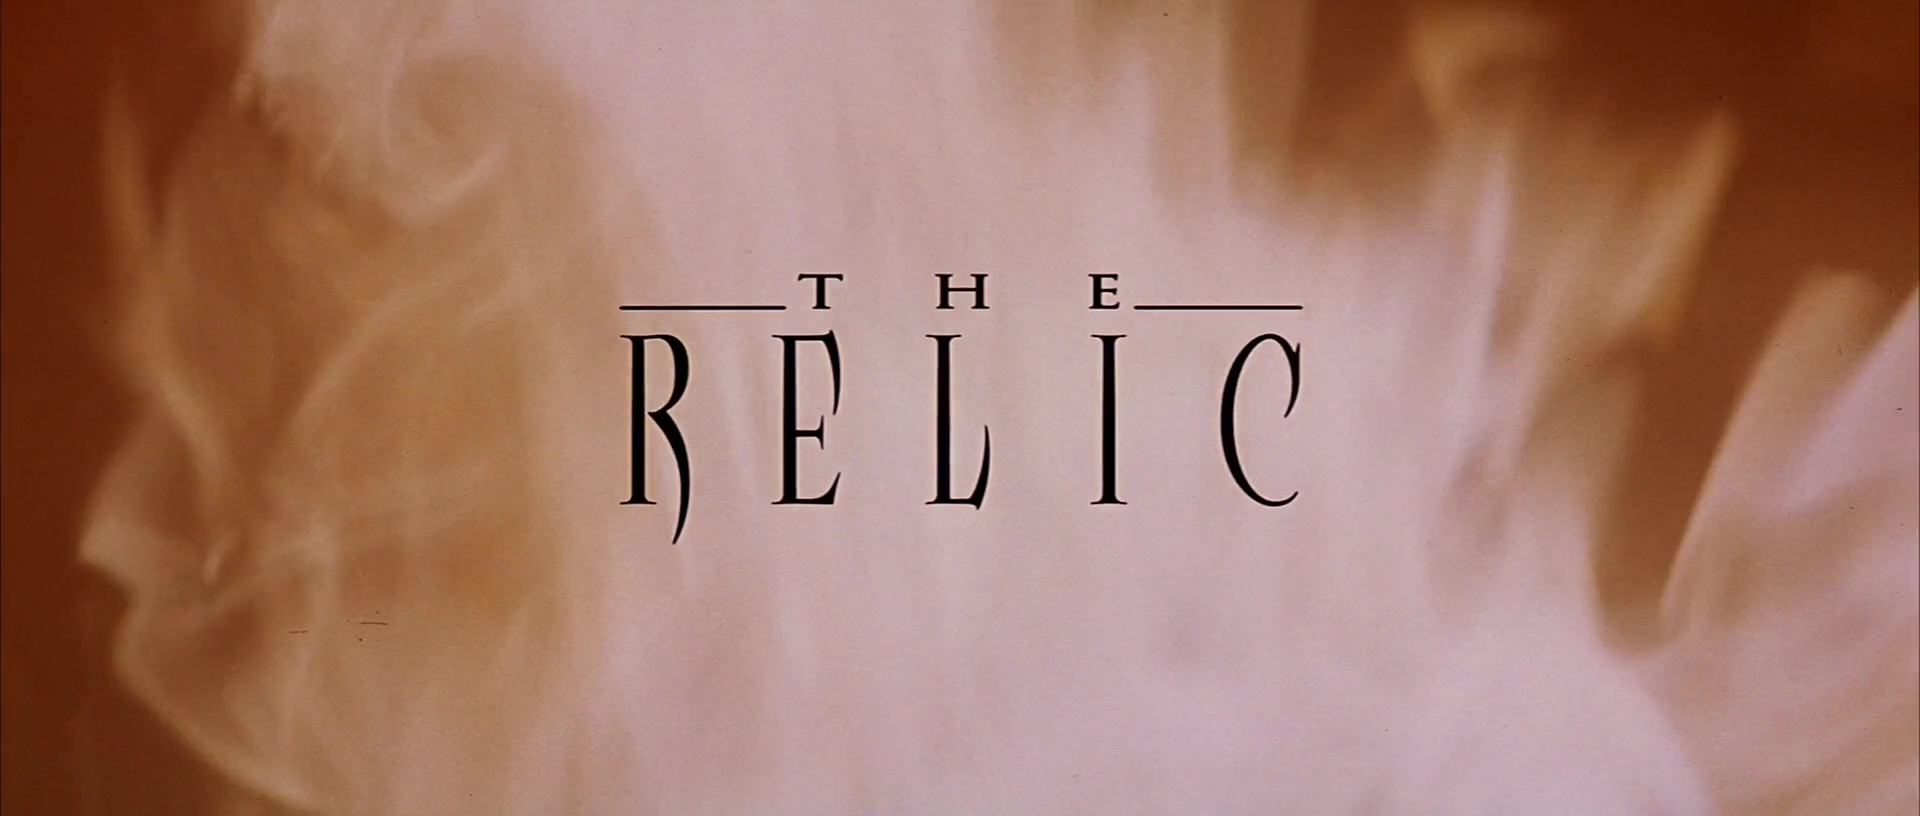 RELIC (The Relic) de Peter Hyams (1997)